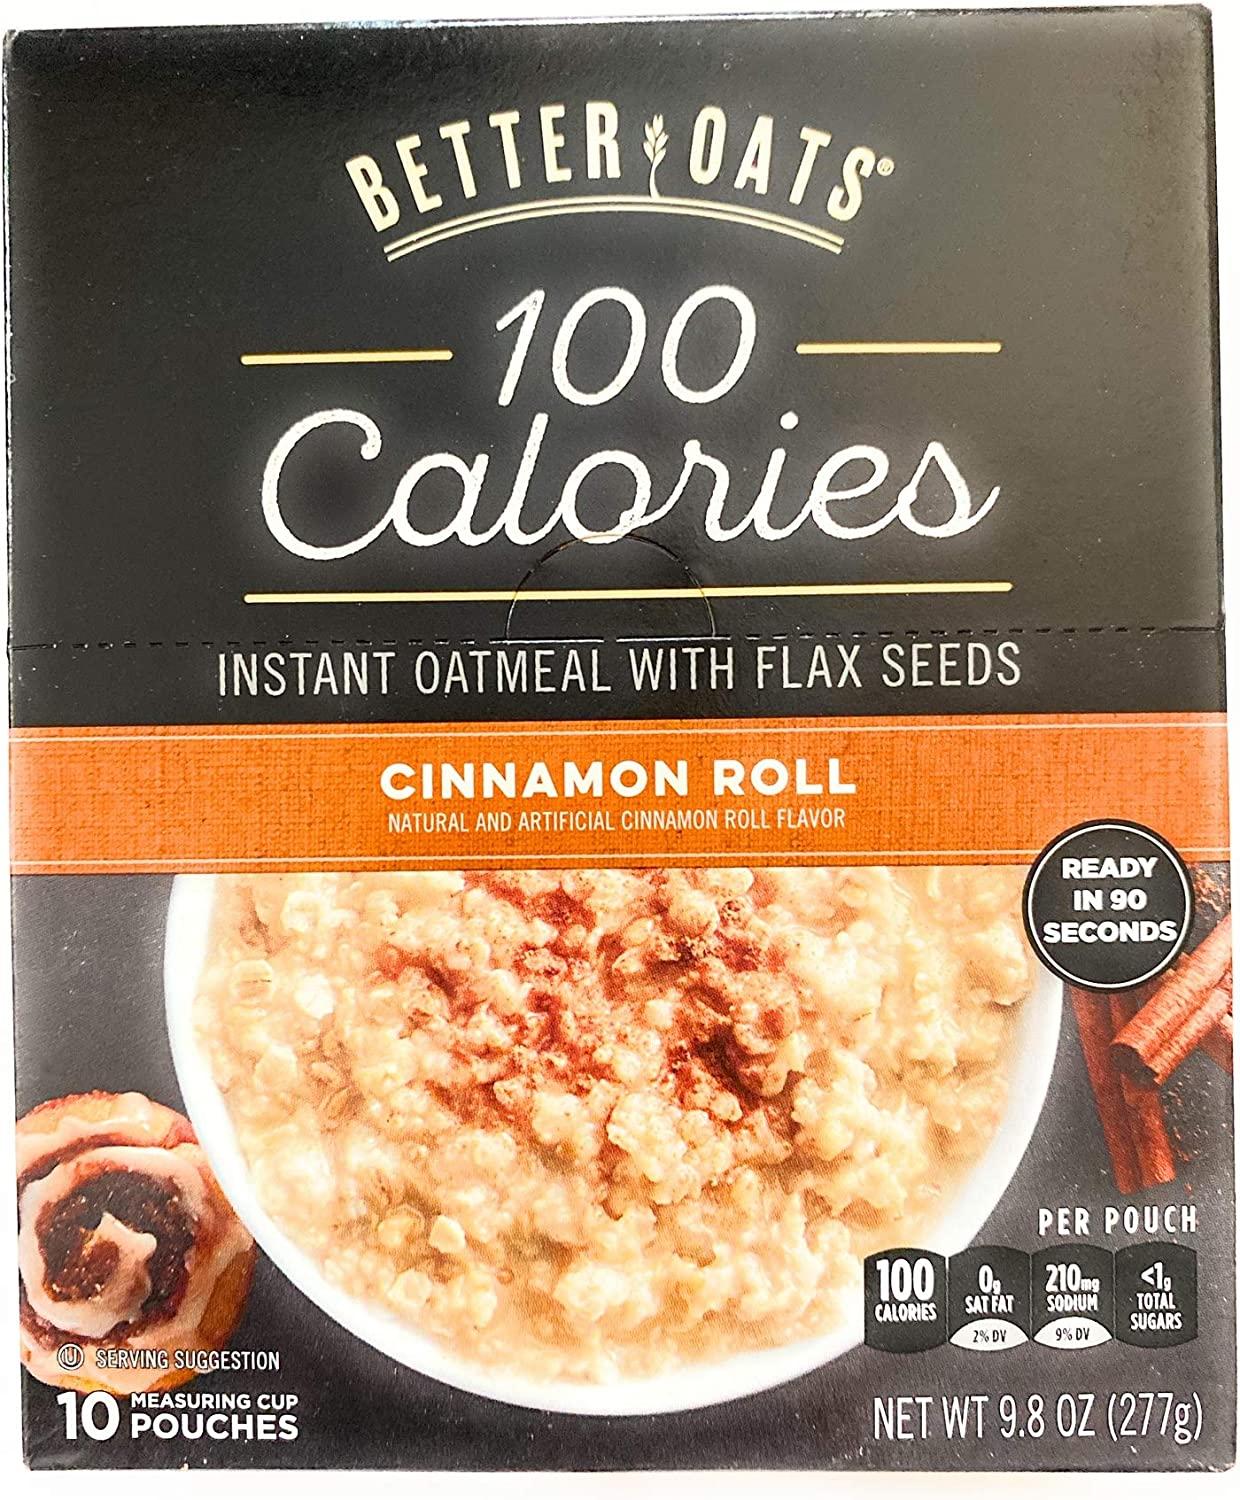 100 Calorie Cinnamon Roll - Better Oats